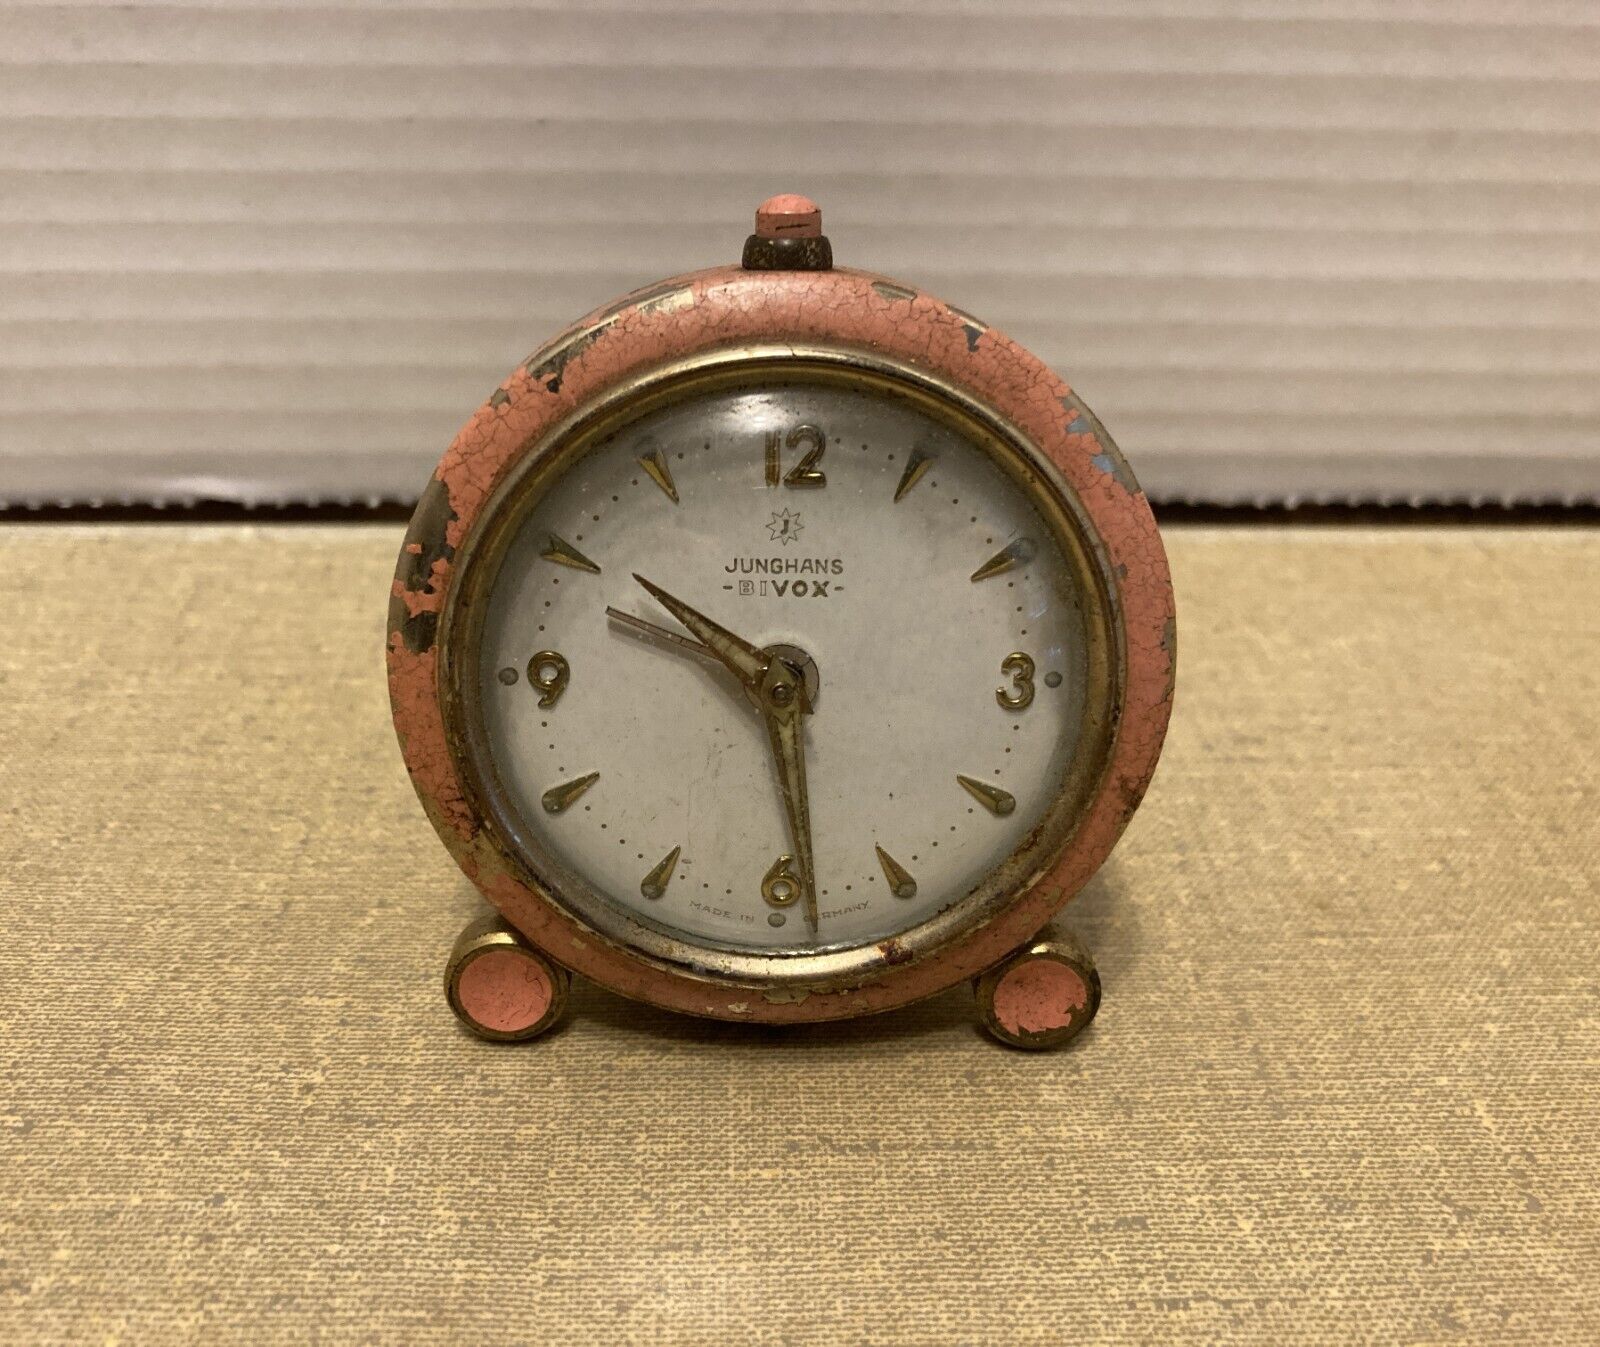 Vintage Junghans Bivox Alarm Clock 3\